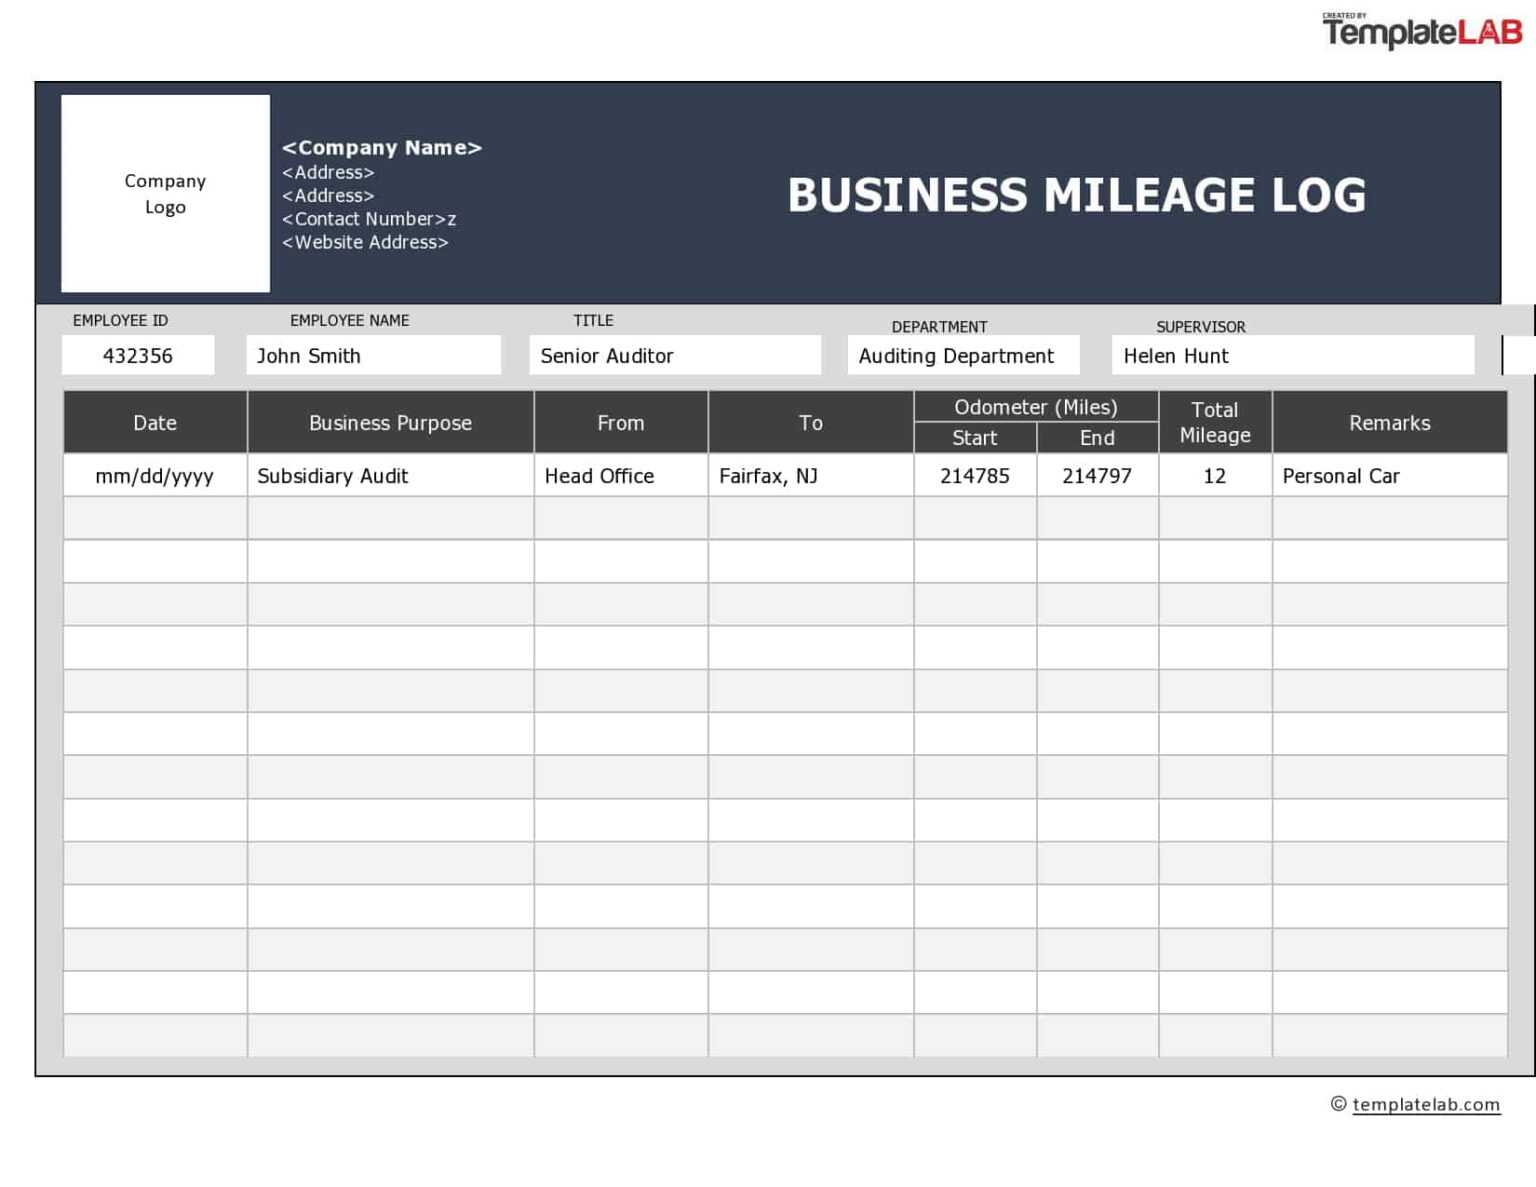 mileage-report-template